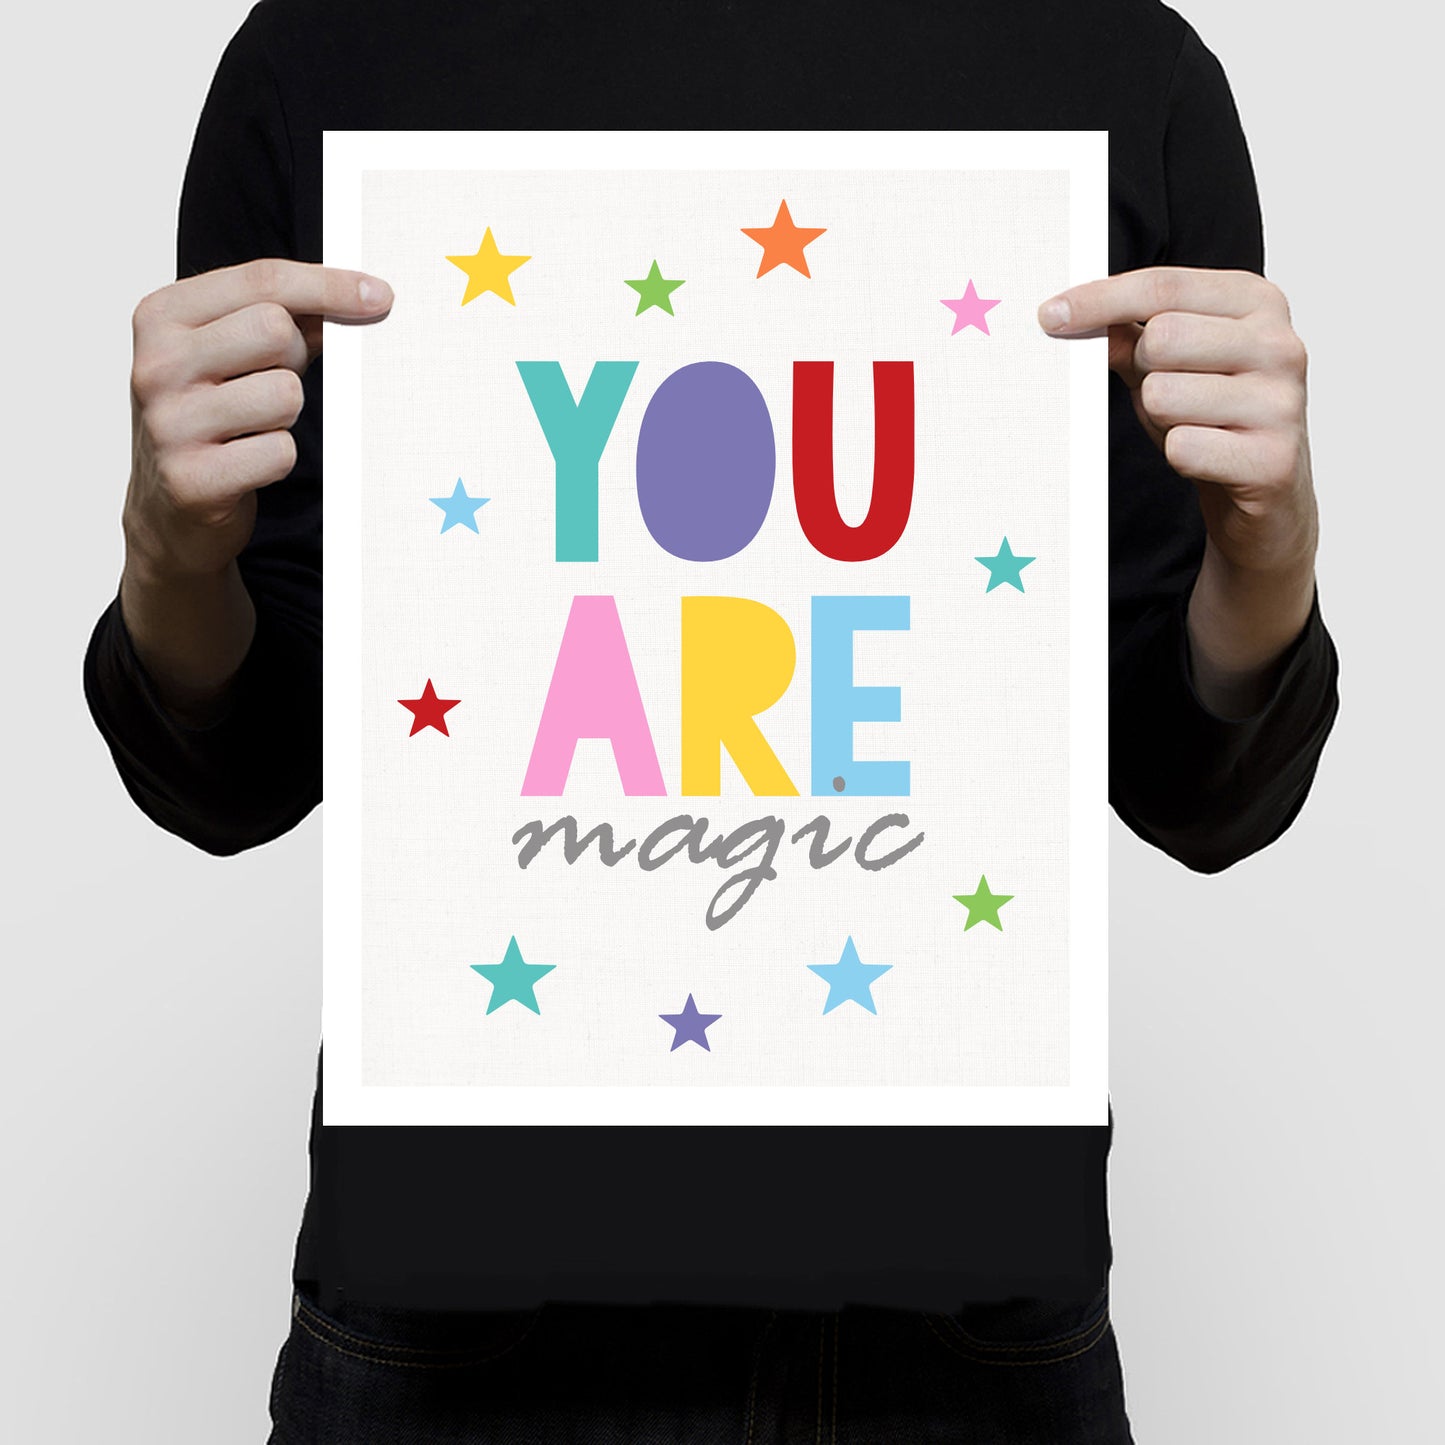 You are magic print